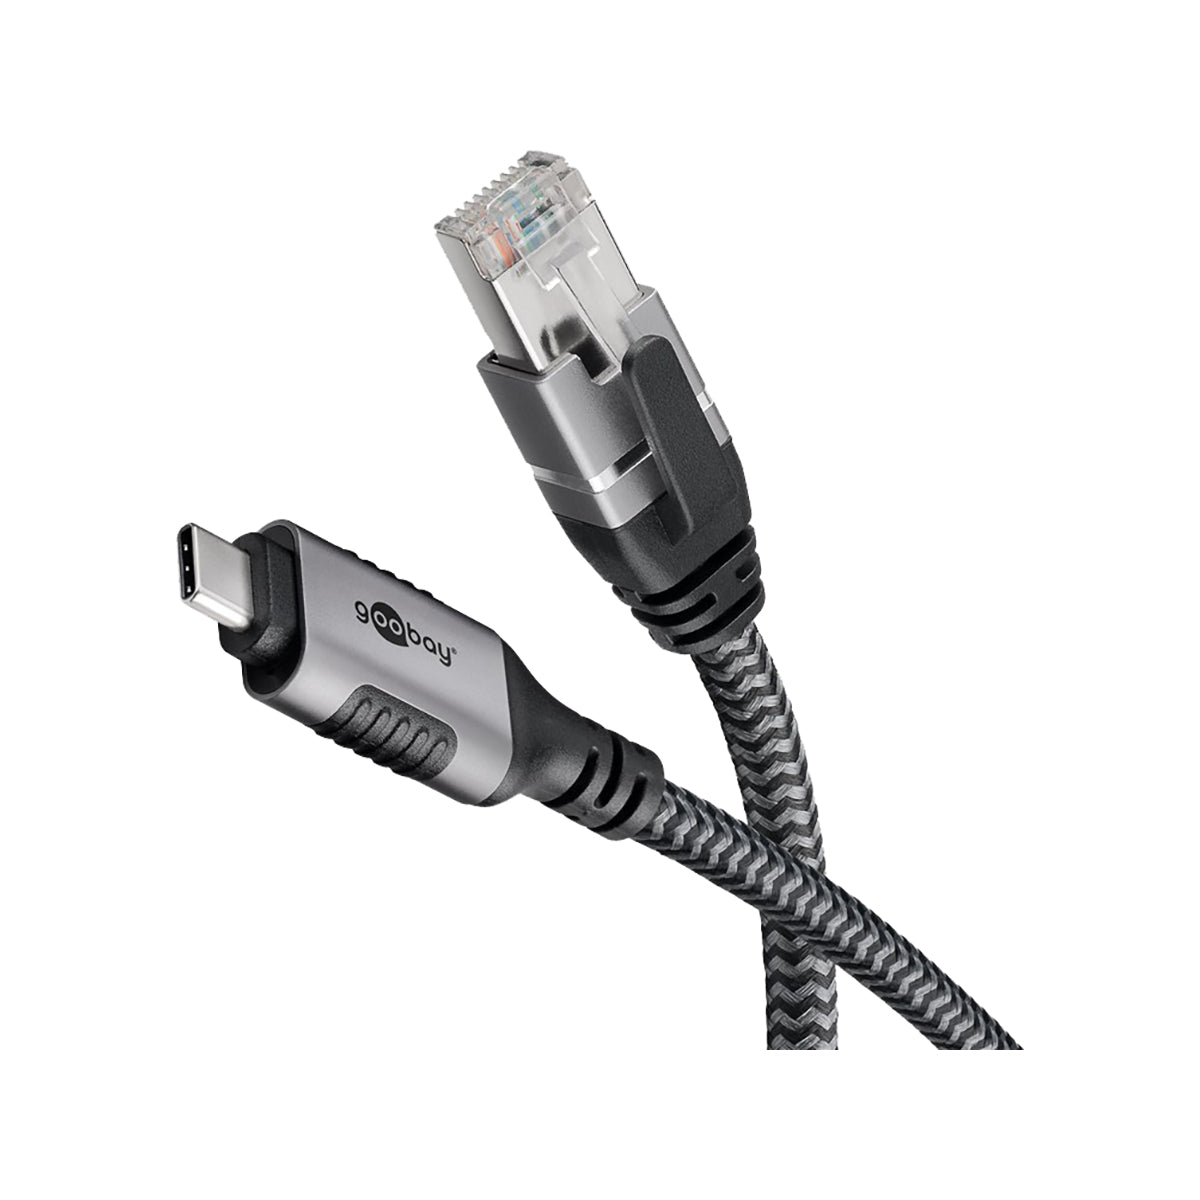 GooBay USB-C™ 3.1 to RJ45 Ethernet Cable 3m for Laptop/Tablet - Black